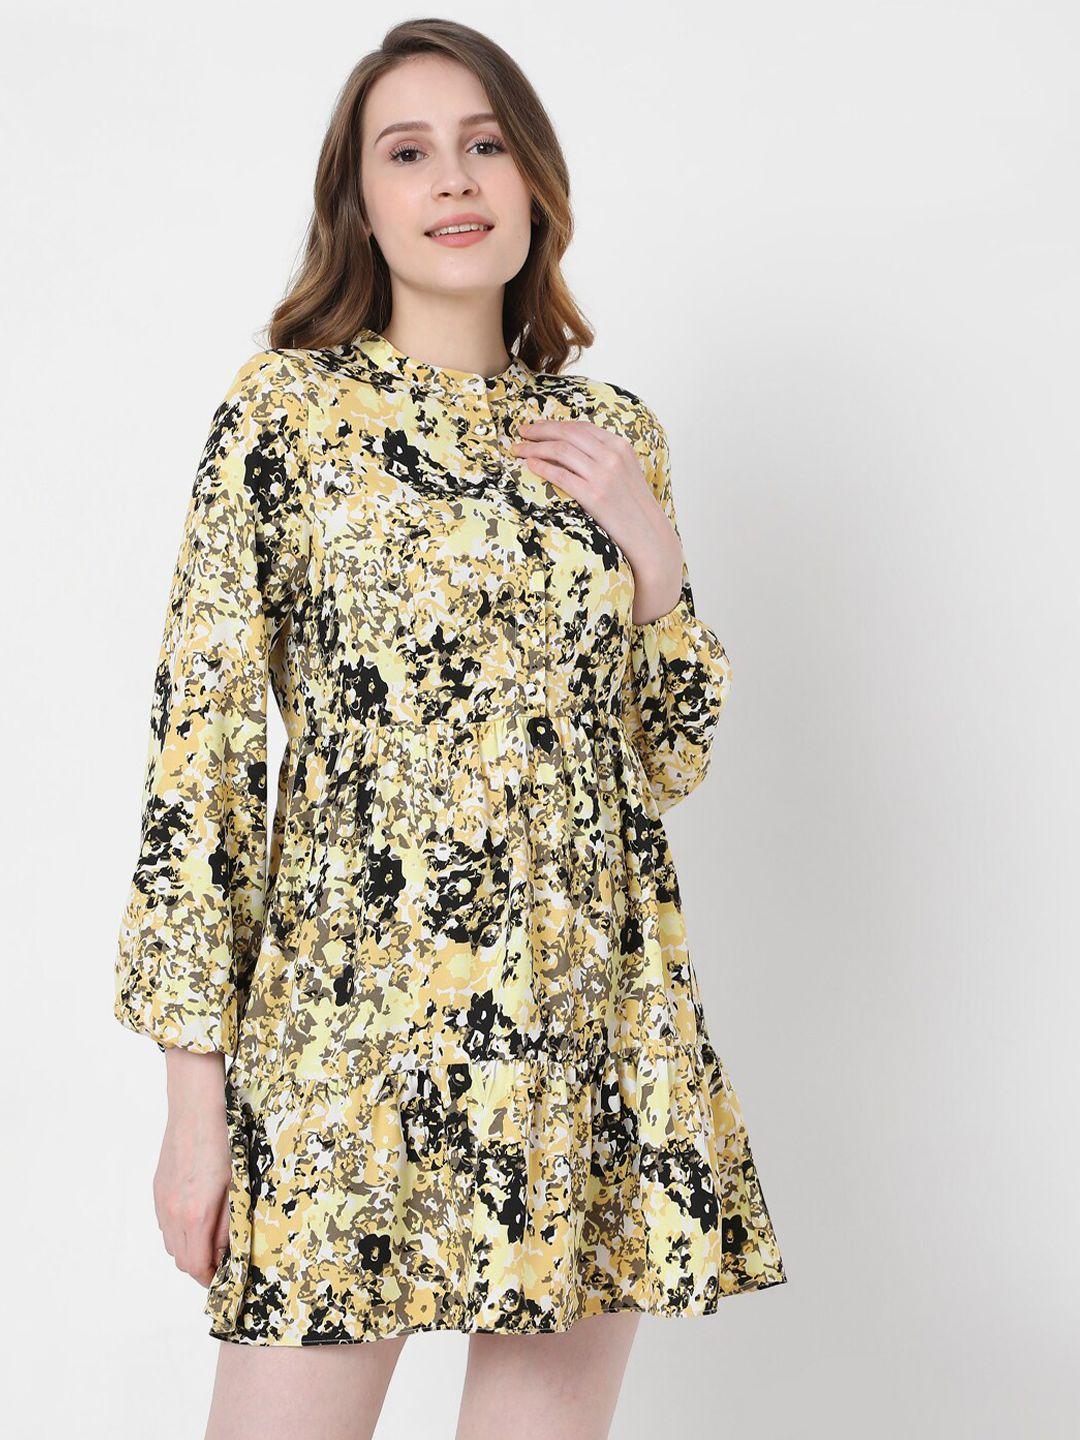 vero moda yellow & black abstract printed mini fit & flare dress